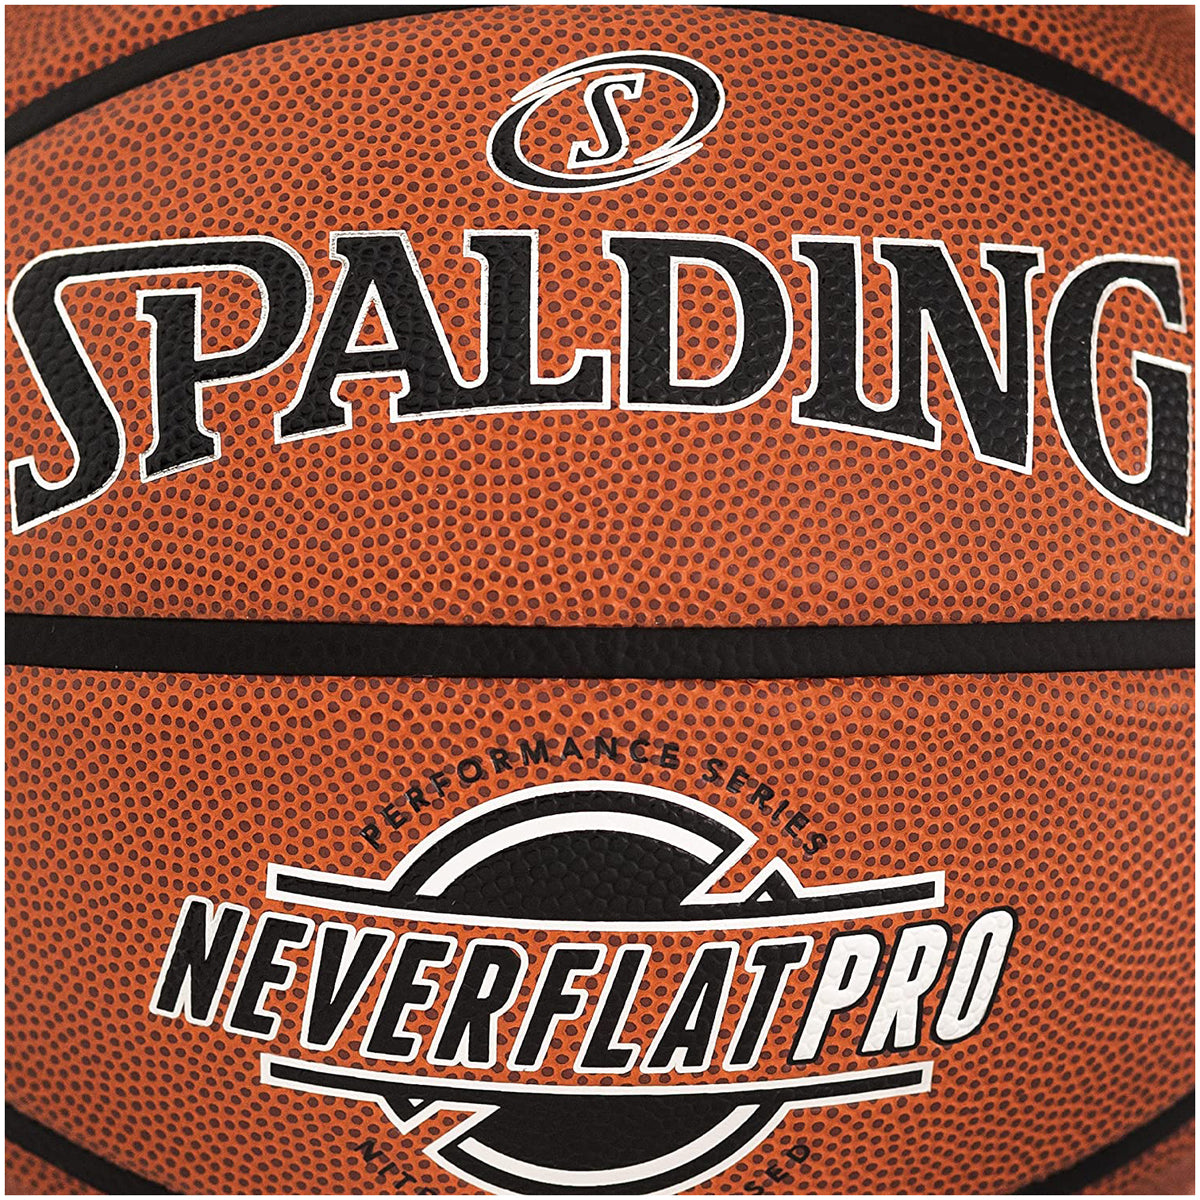 Spalding NeverFlat Pro Indoor/Outdoor Basketball Spalding